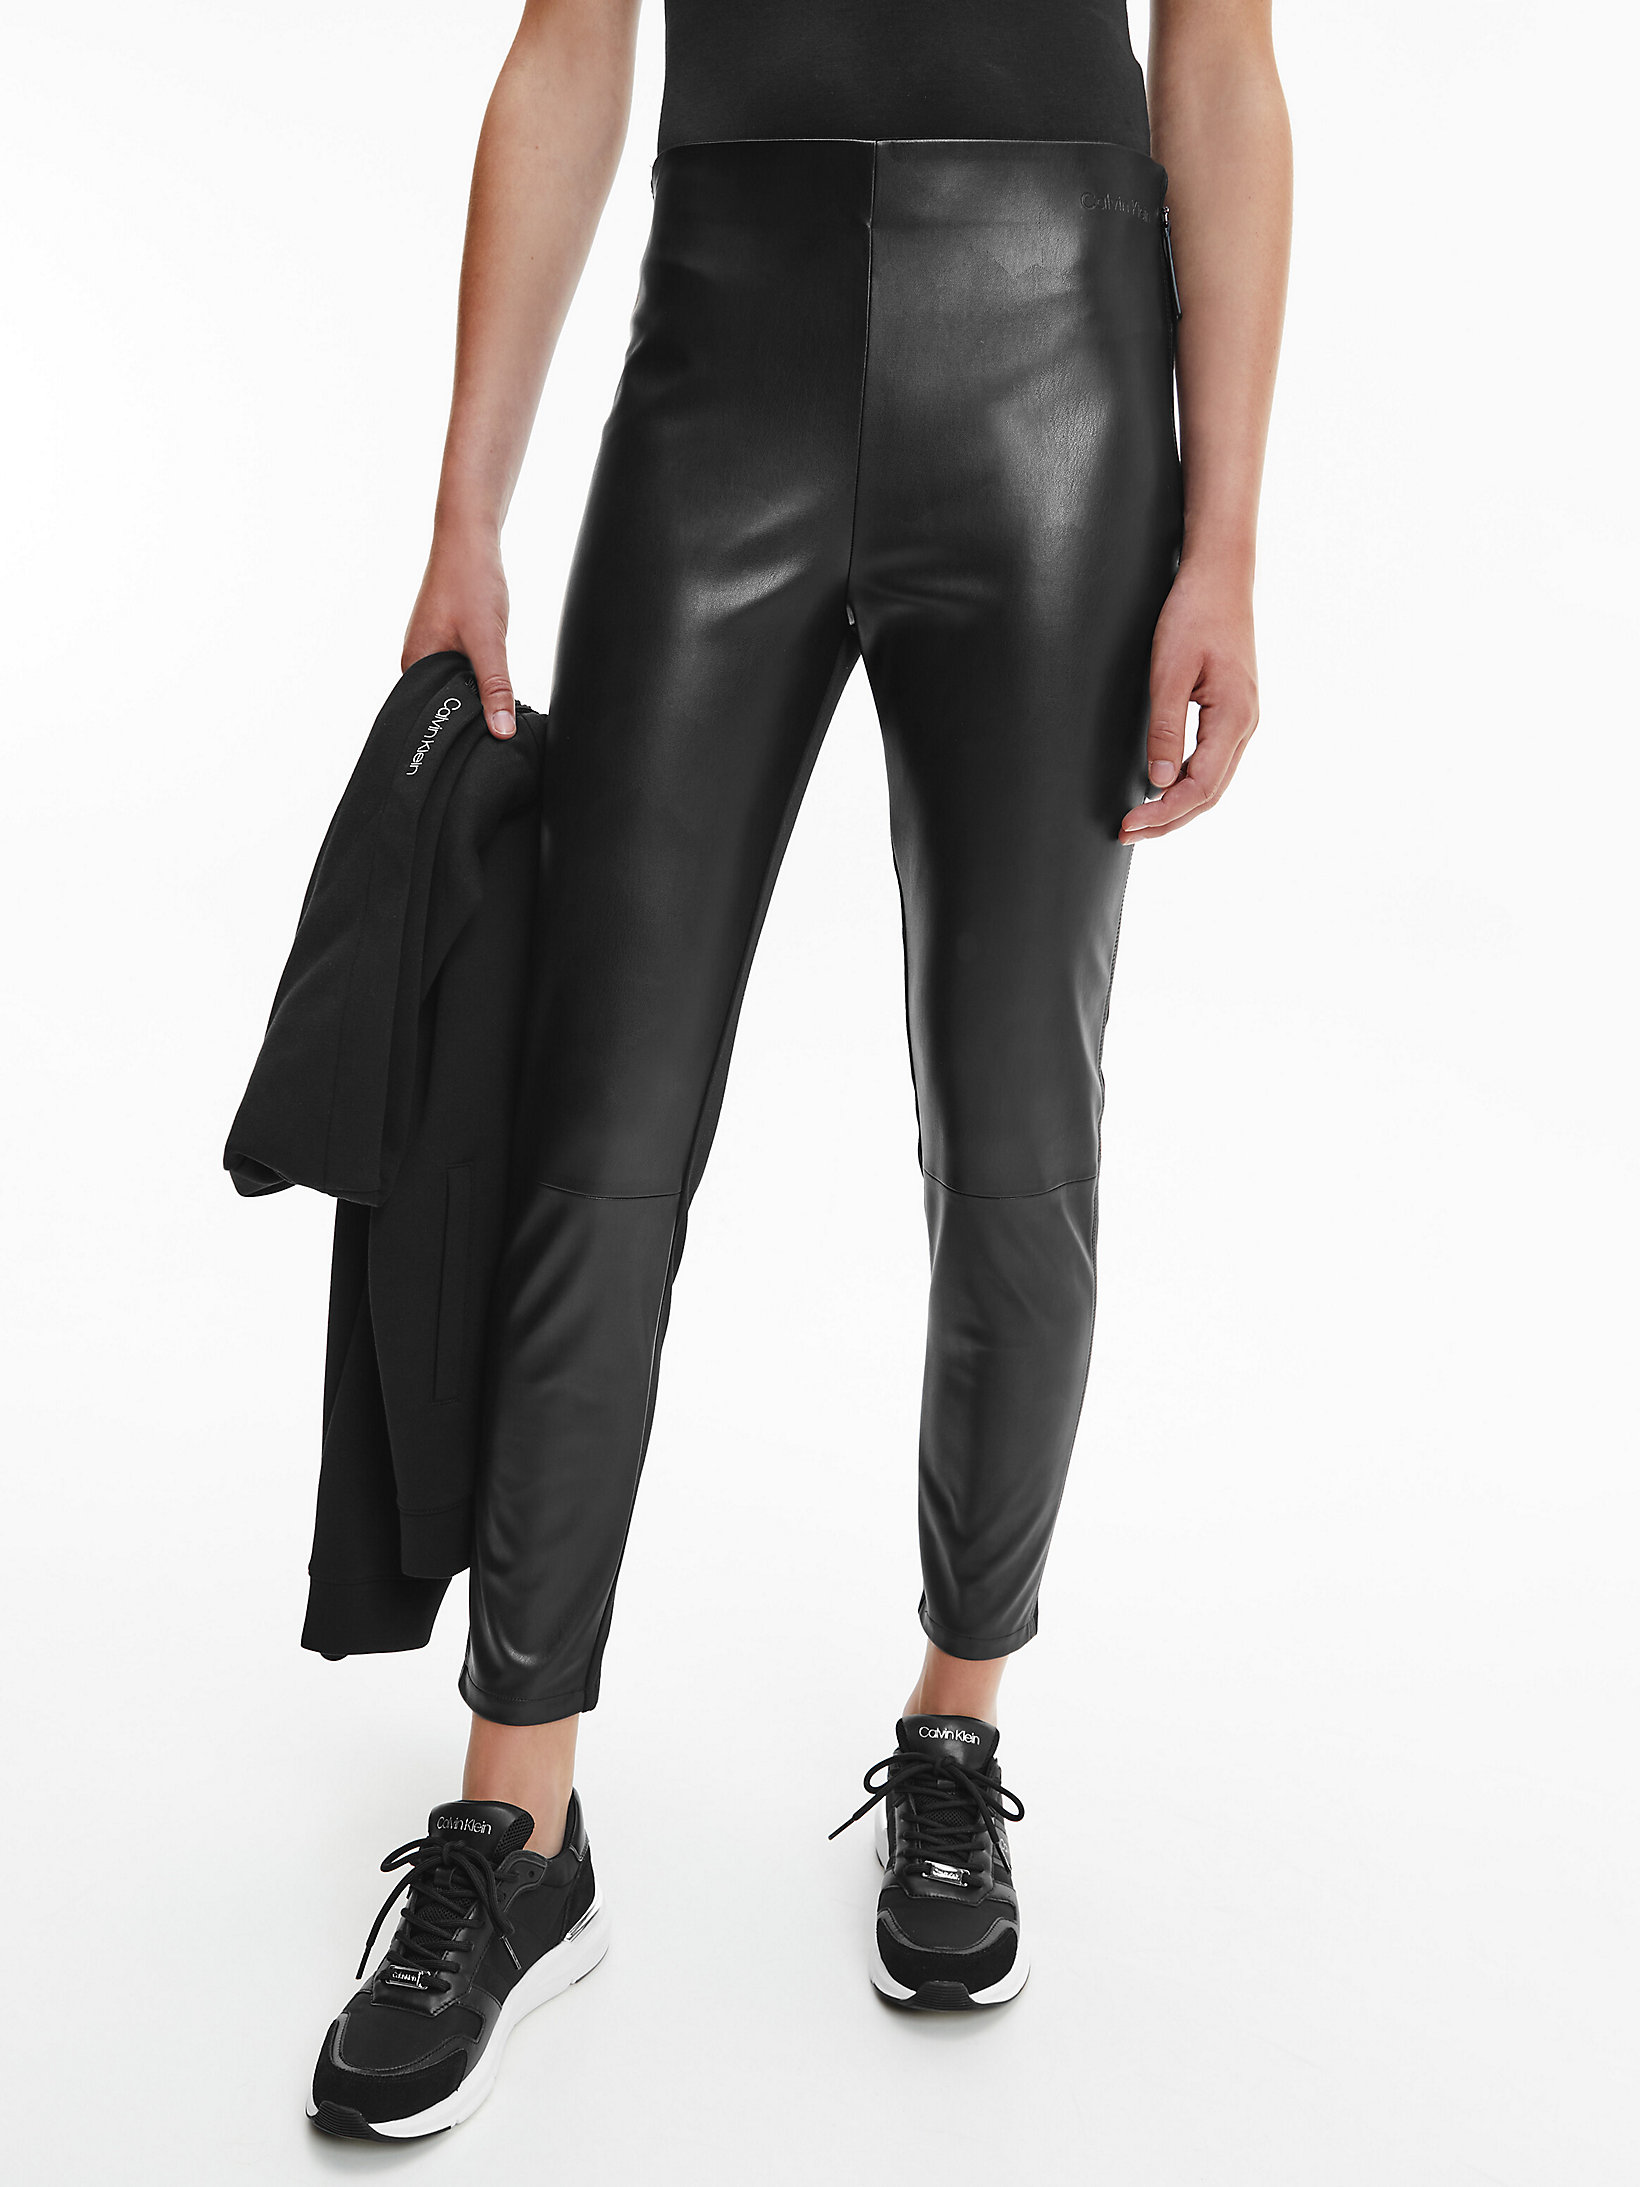 CK Black Faux Leather Leggings undefined women Calvin Klein